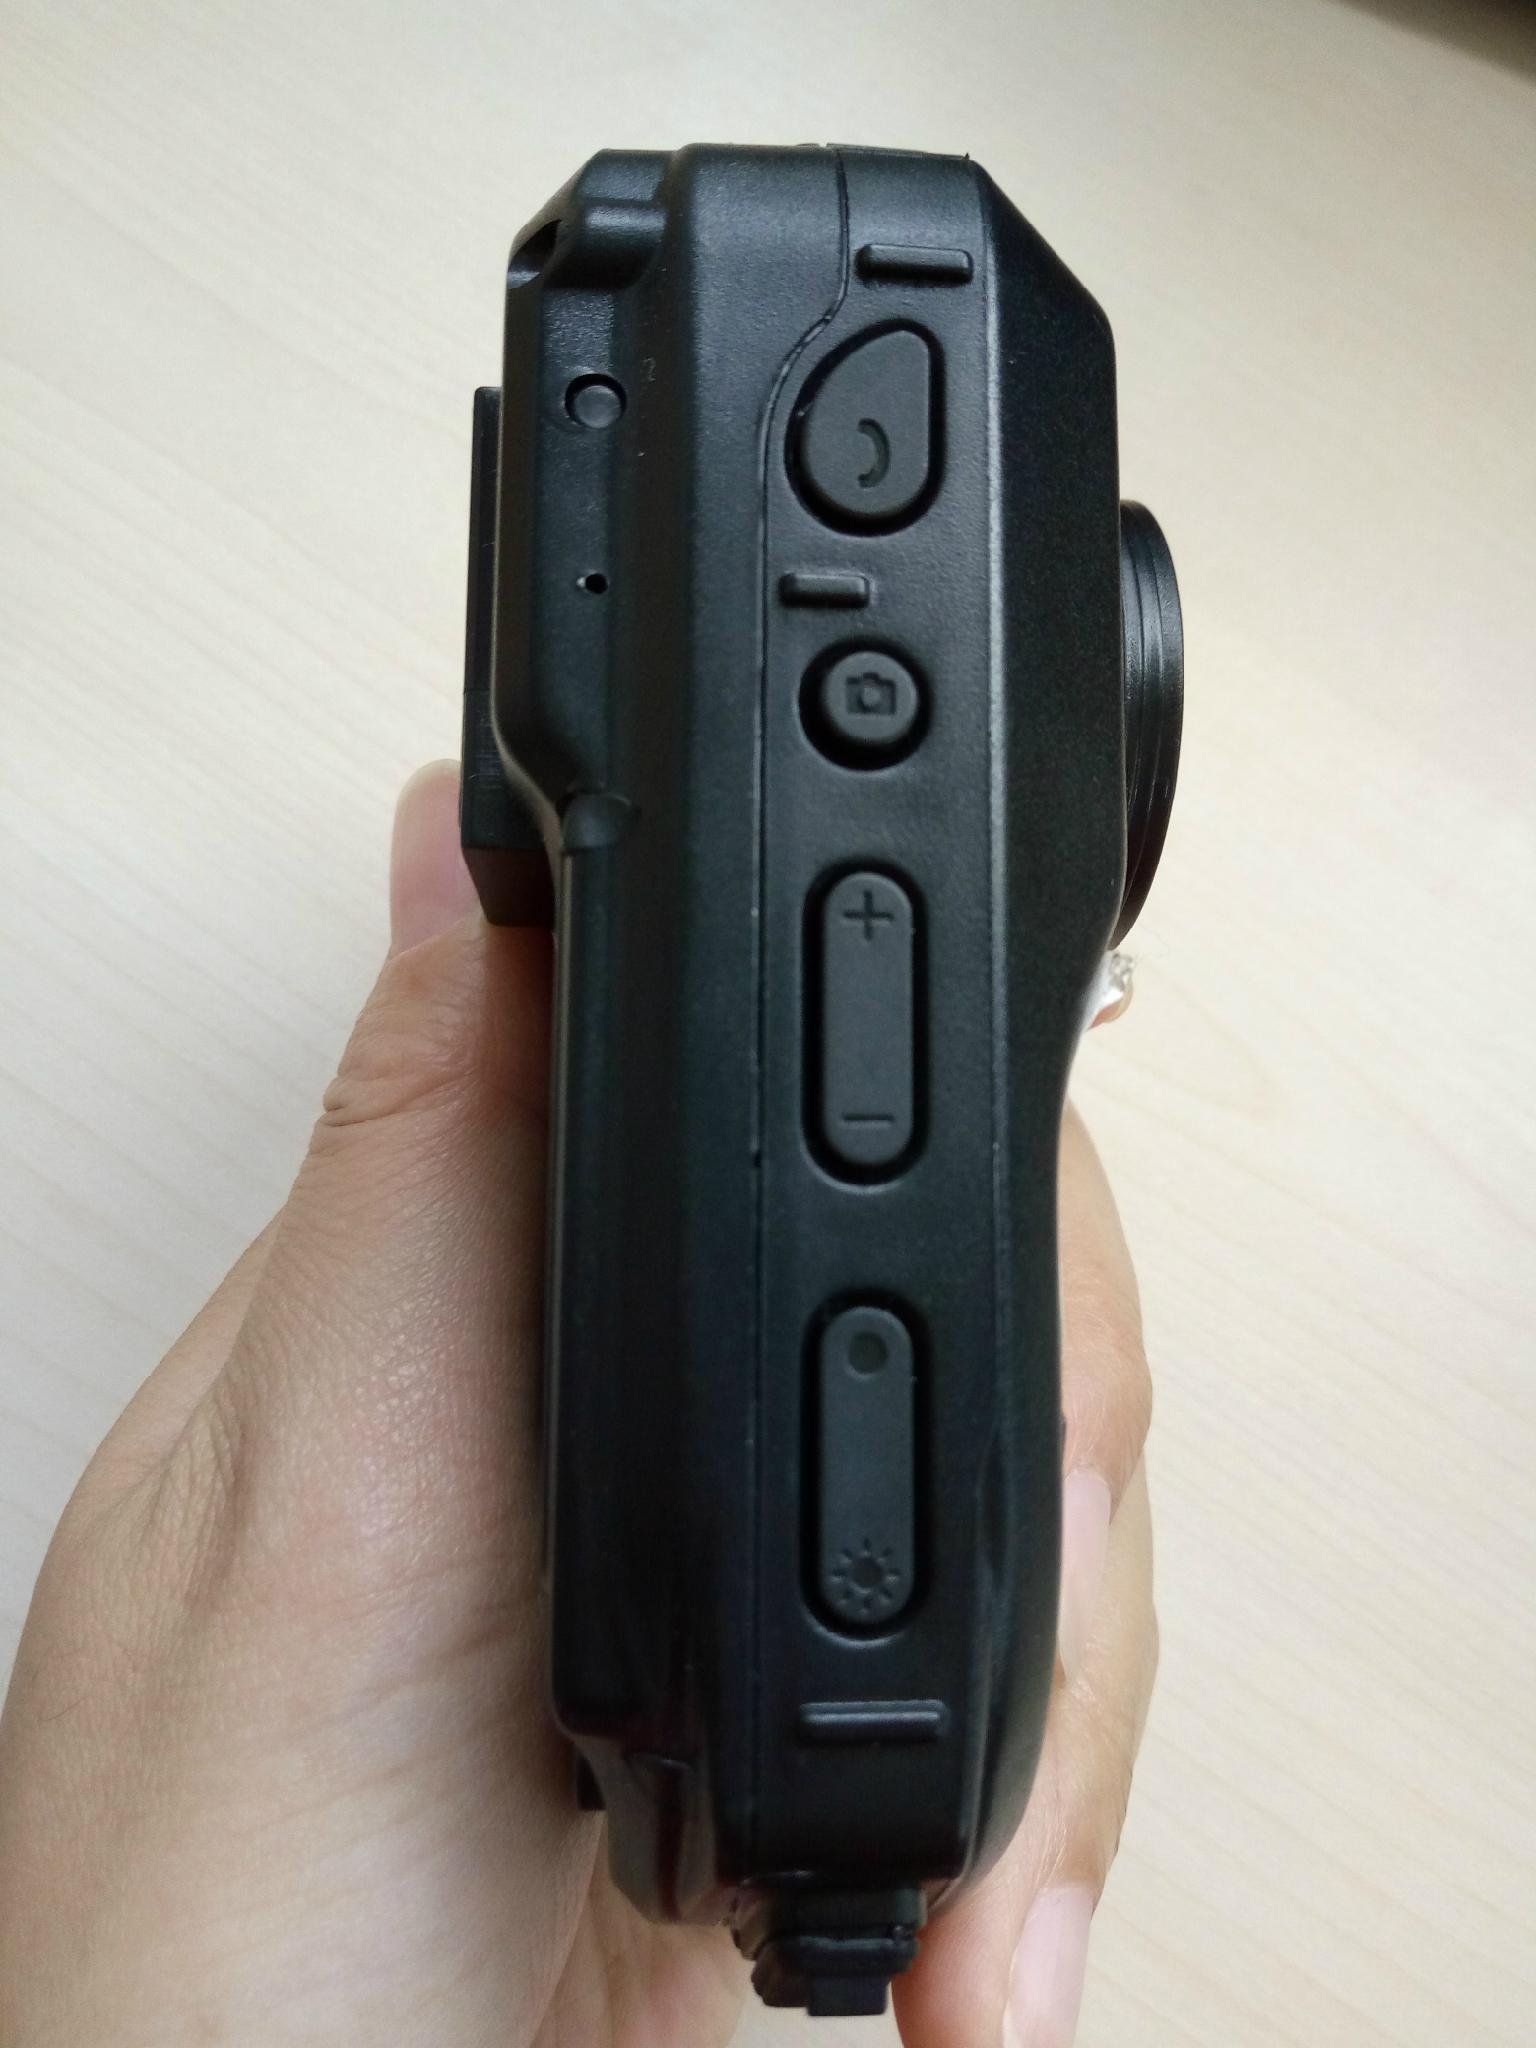  Police body worn camera with GPS 5